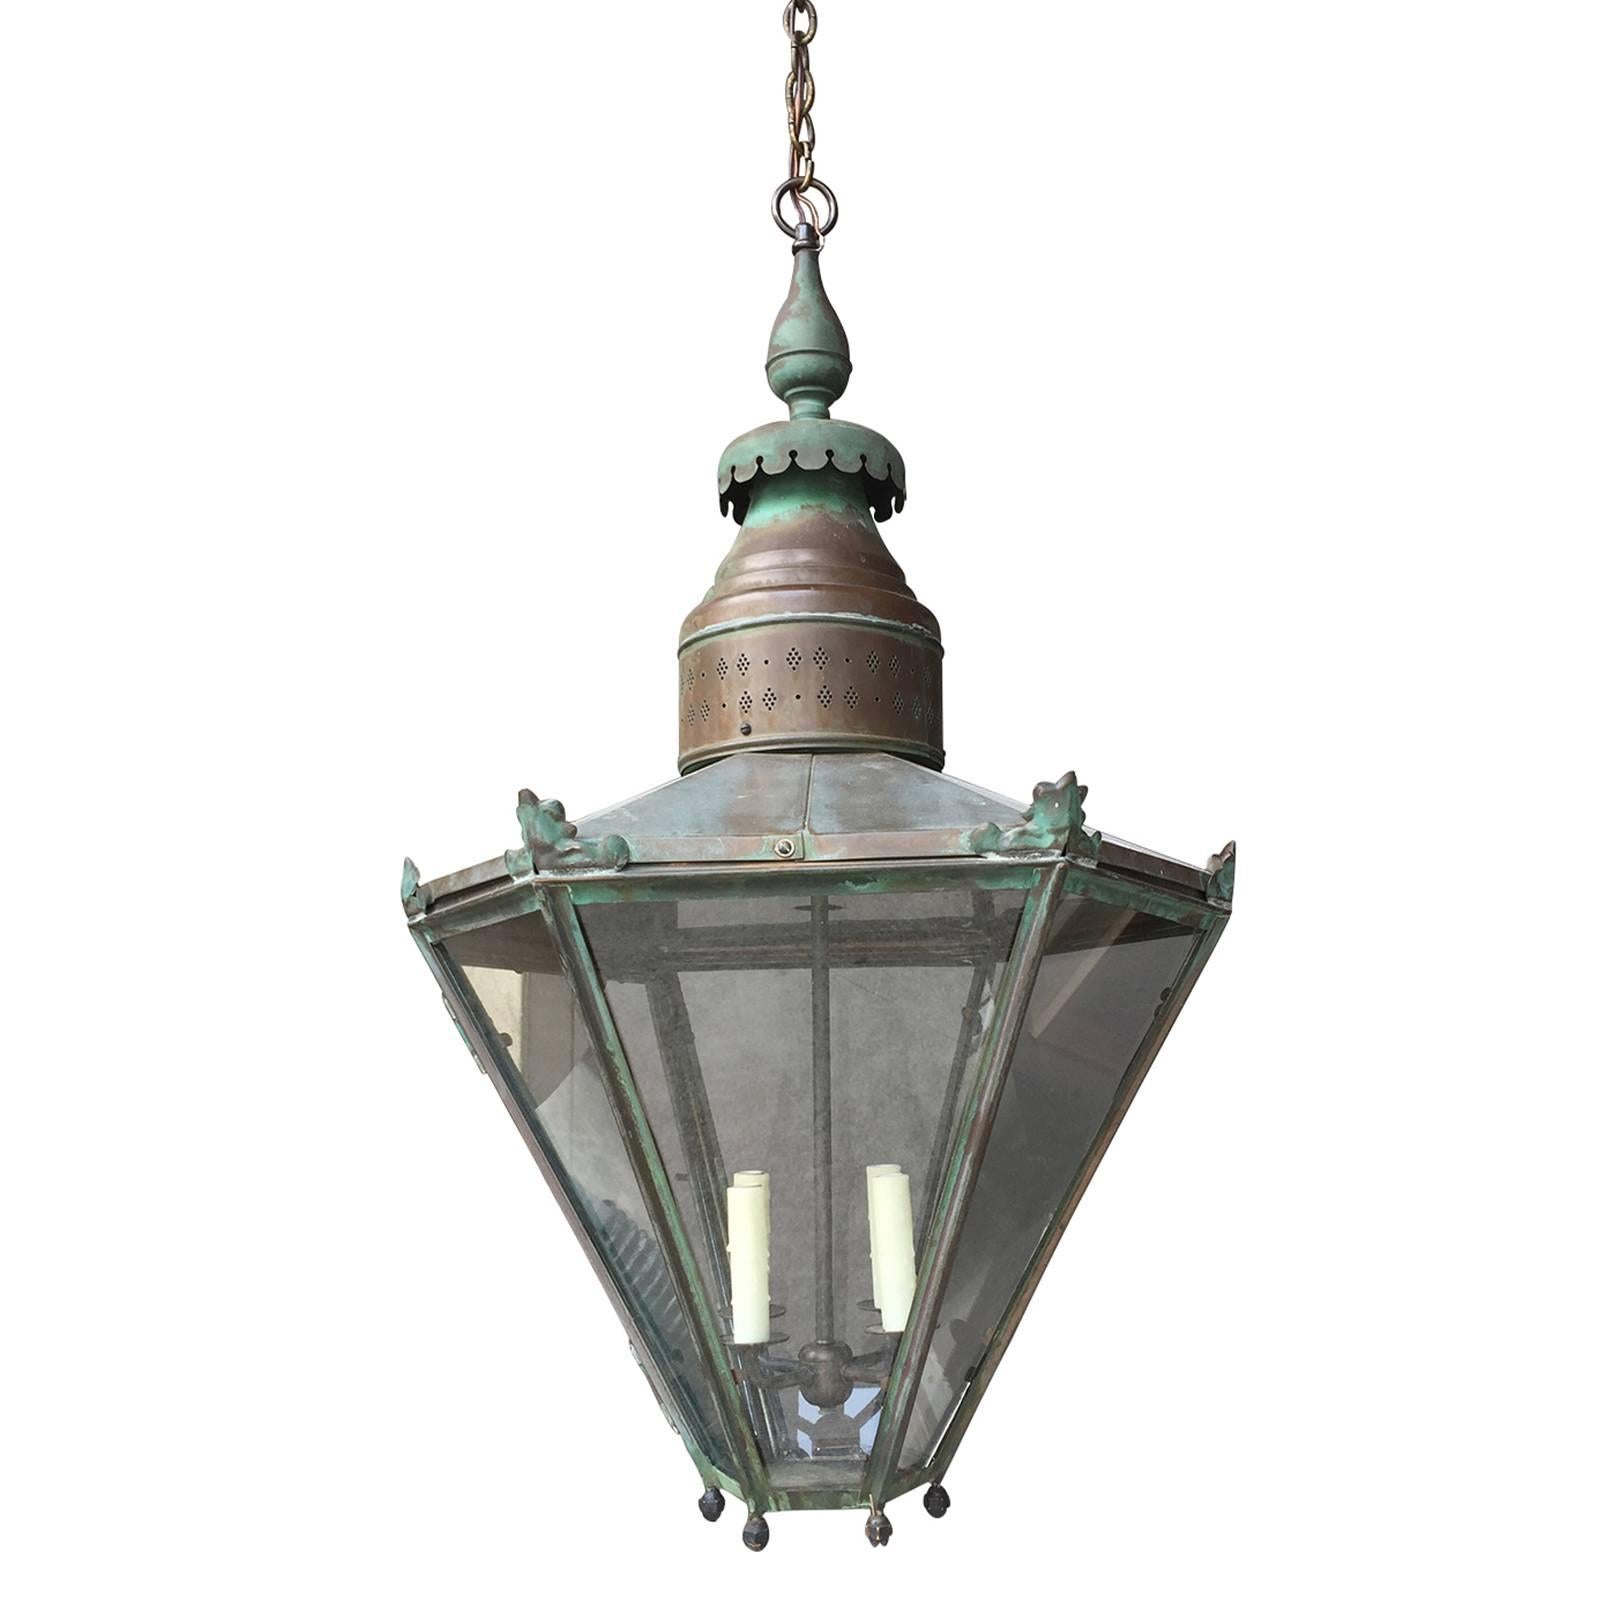 Large 19th Century English Octagonal Exterior Lantern